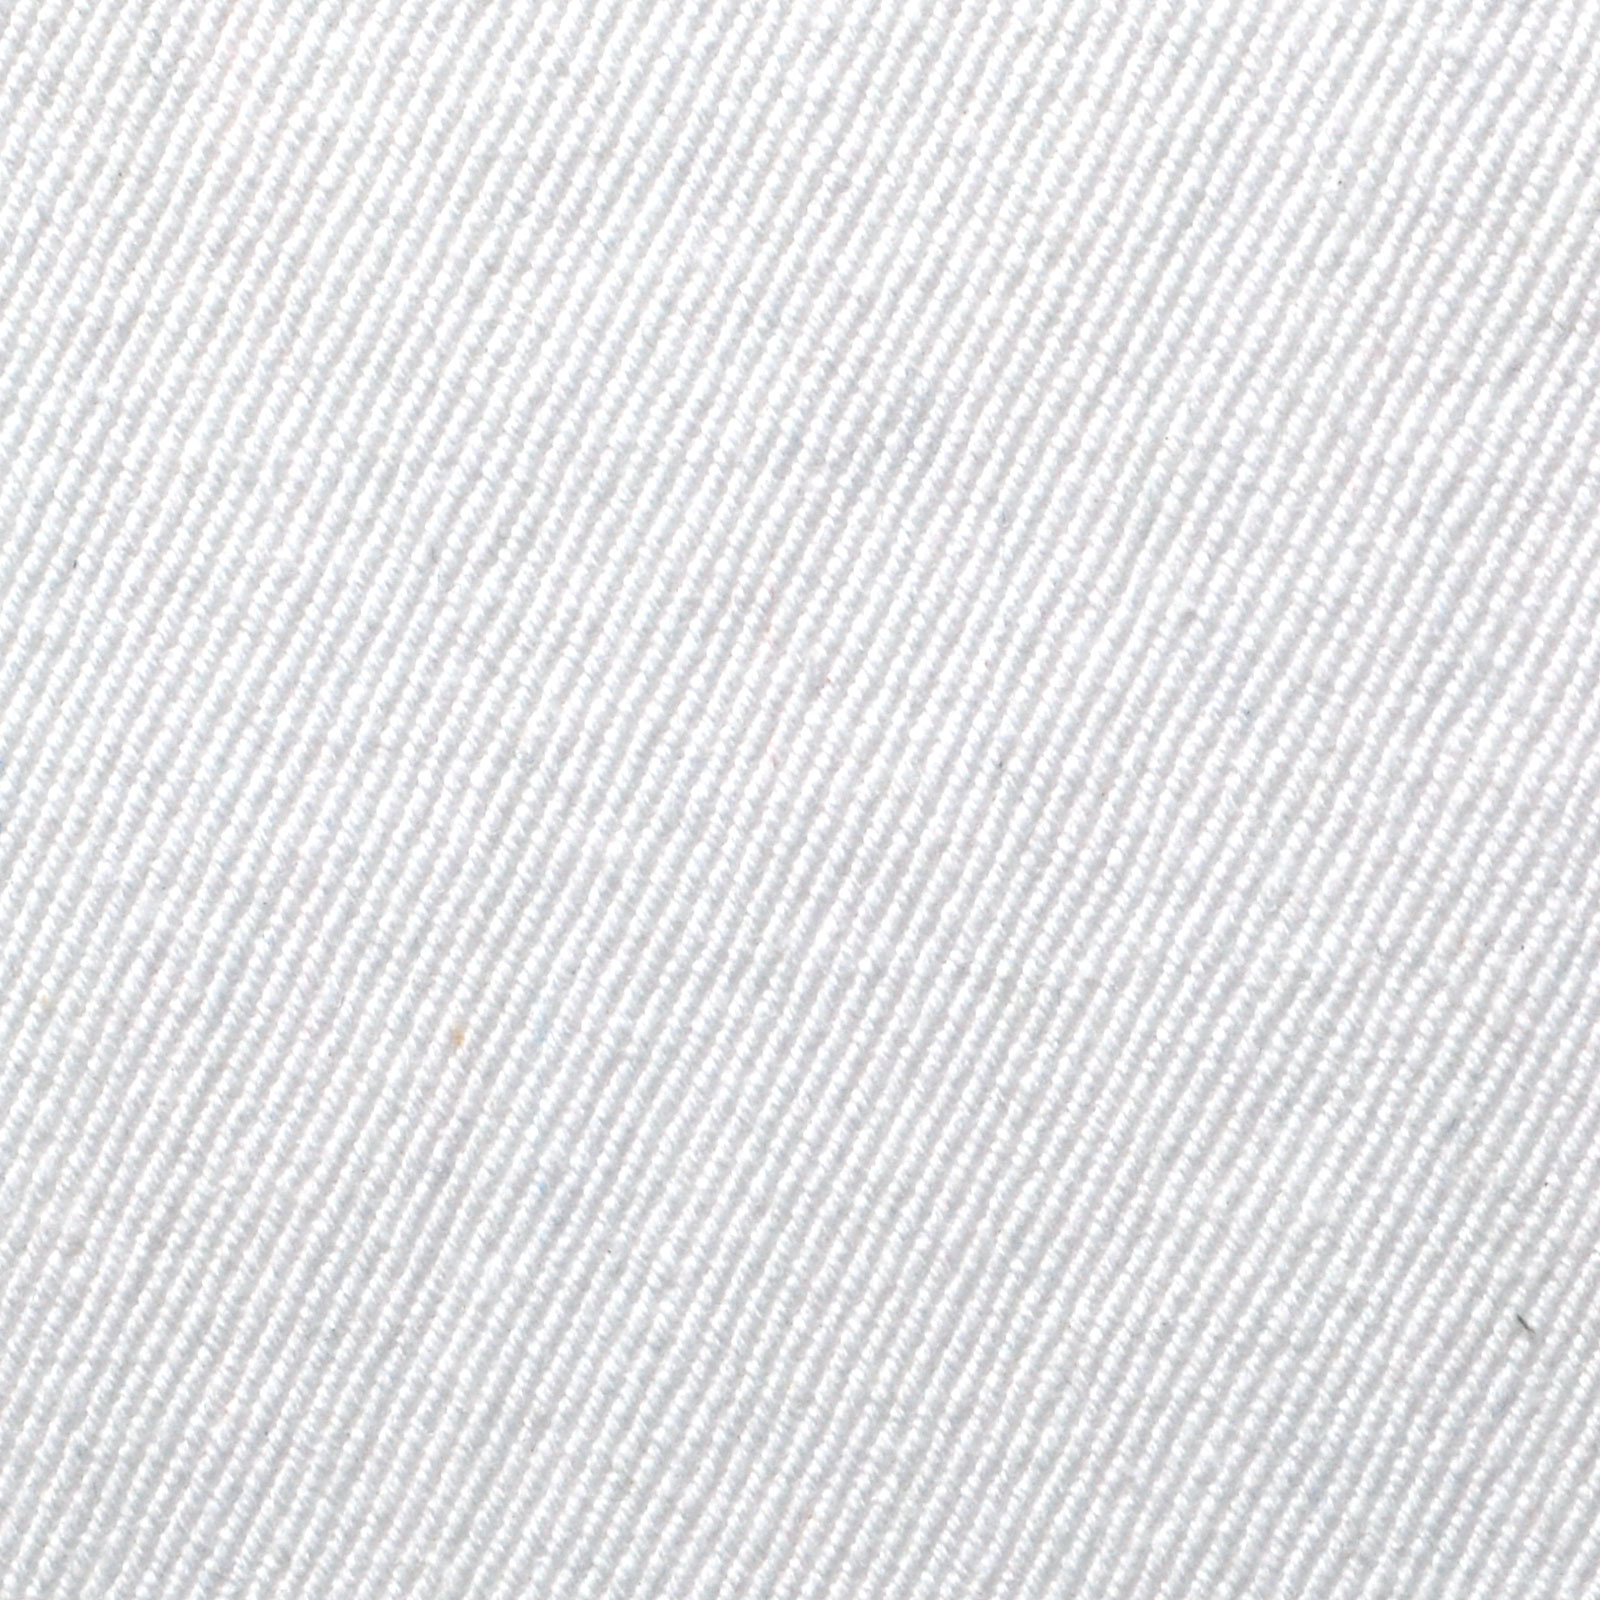 Amazon.com: White Bull Denim Fabric 100% Cotton 10 oz 58/60